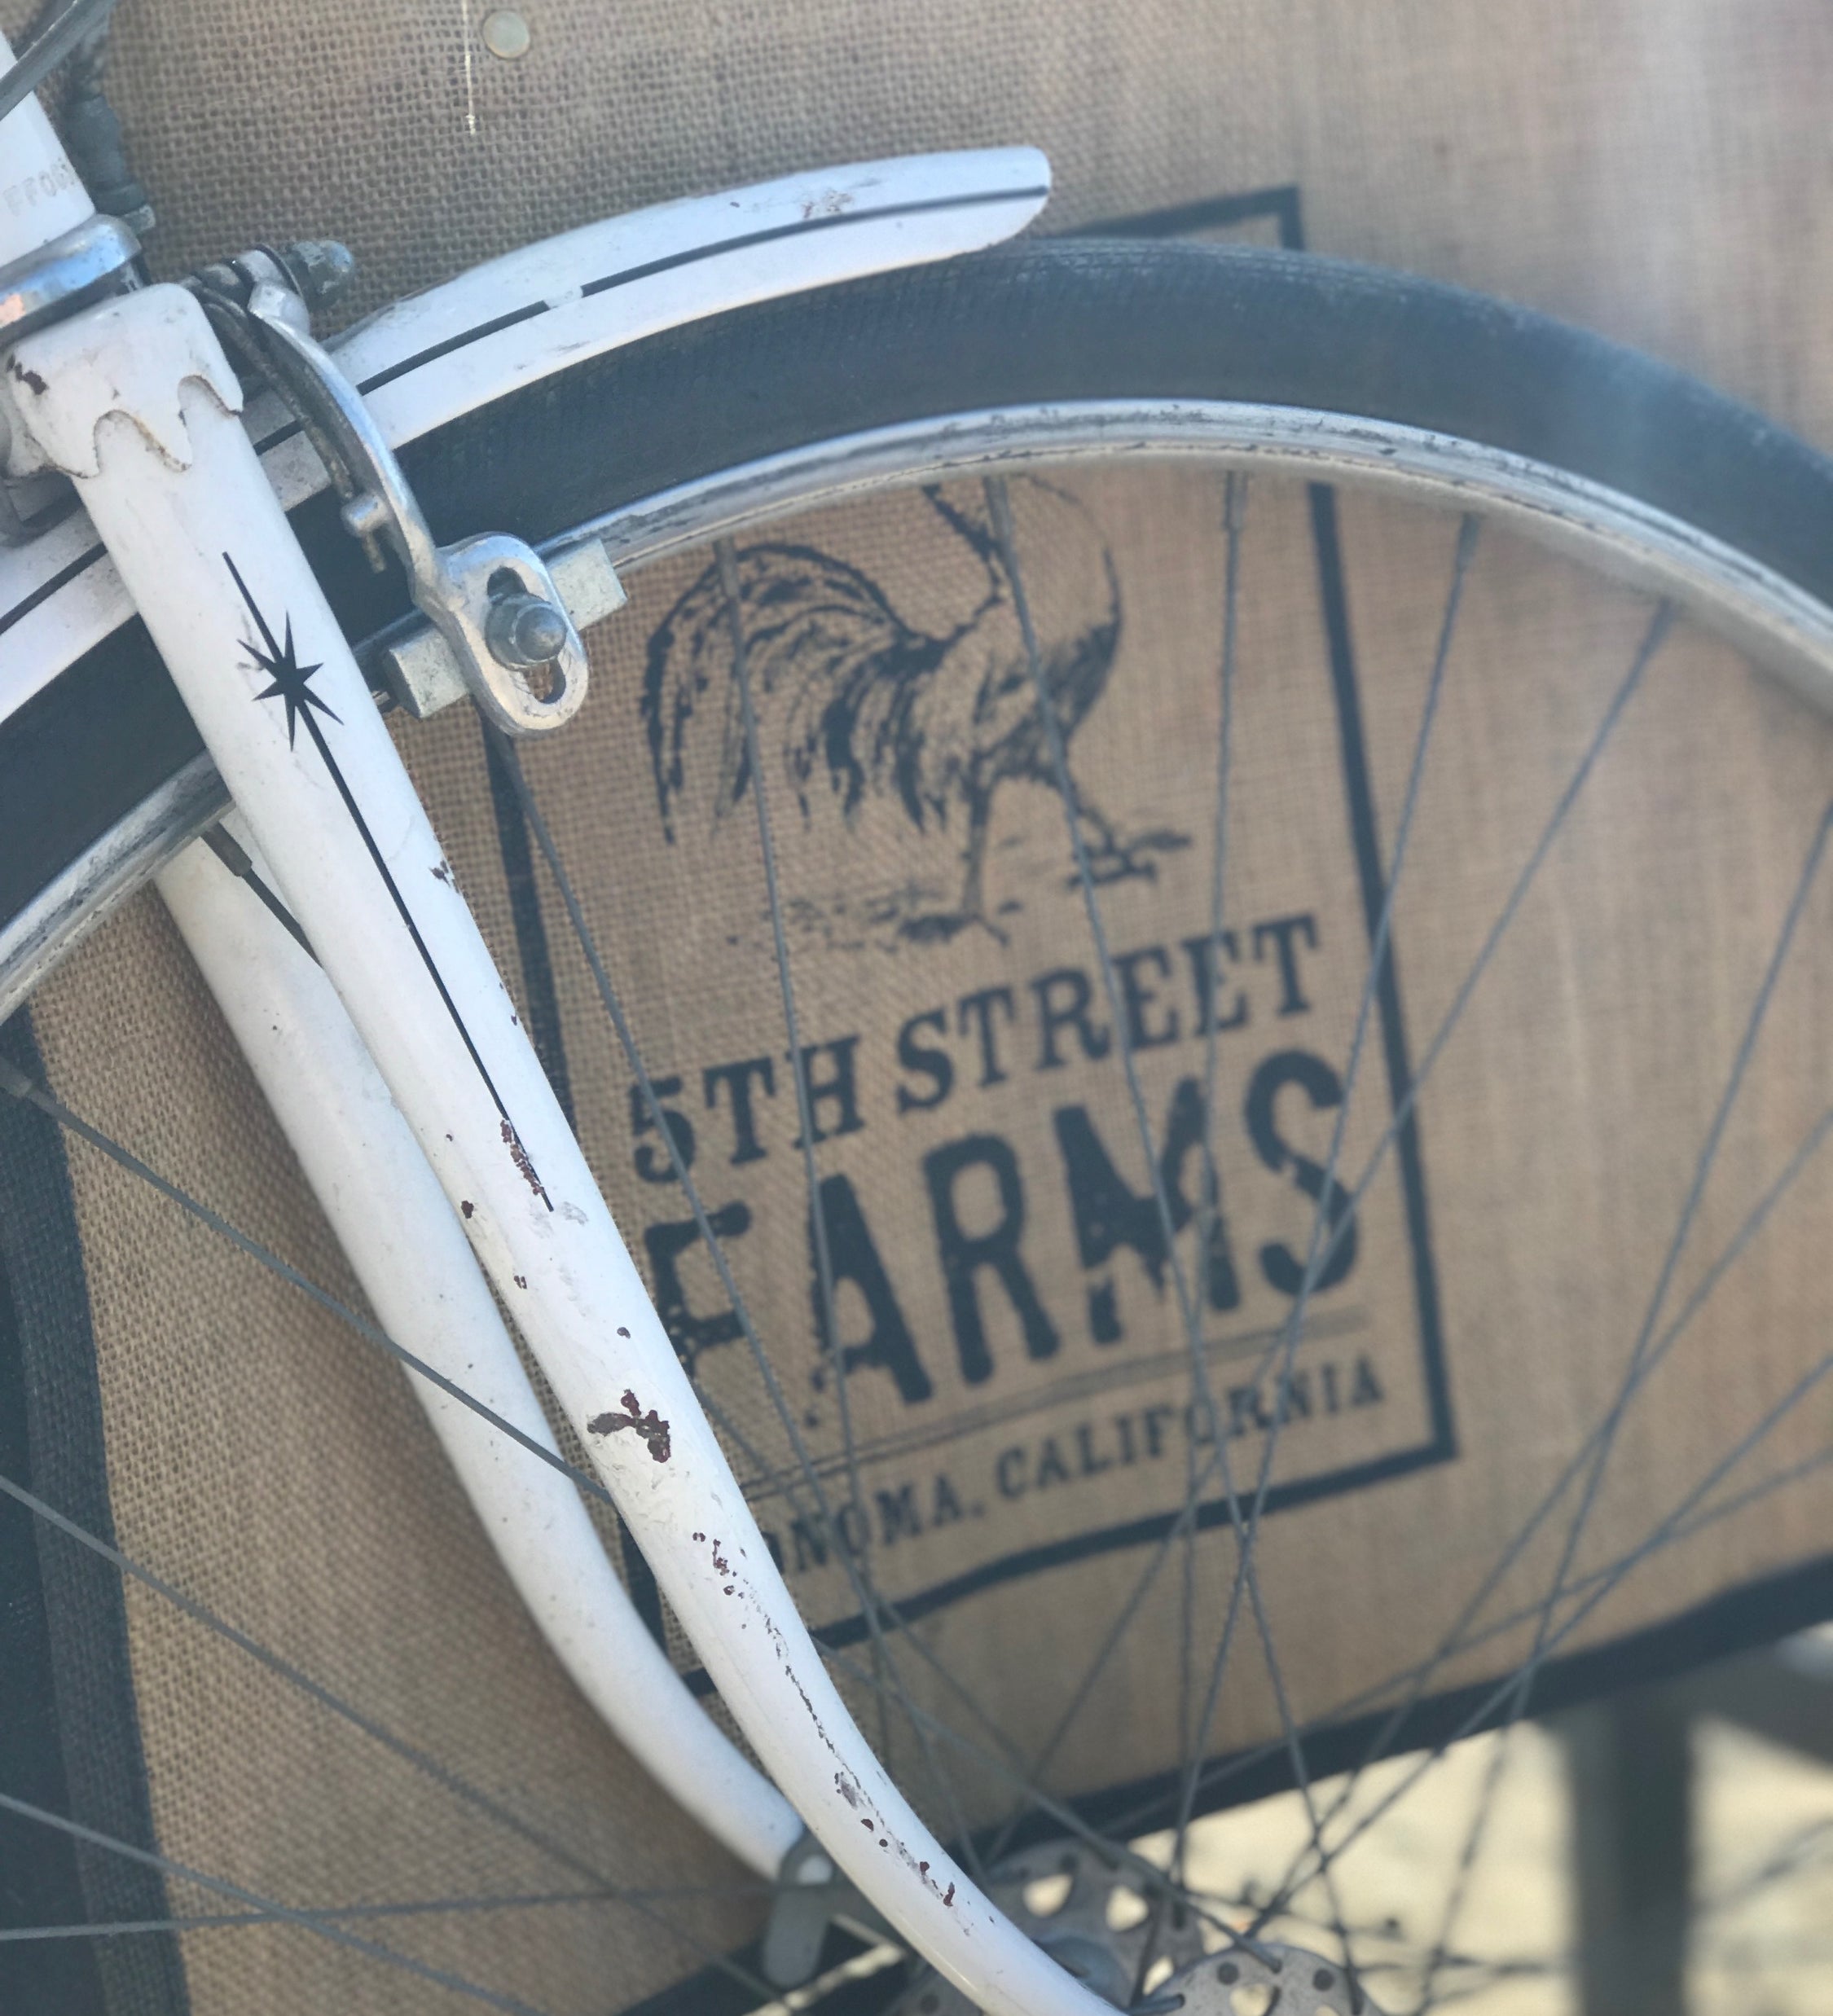 5th Street Farm Farmer's Market in Sonoma